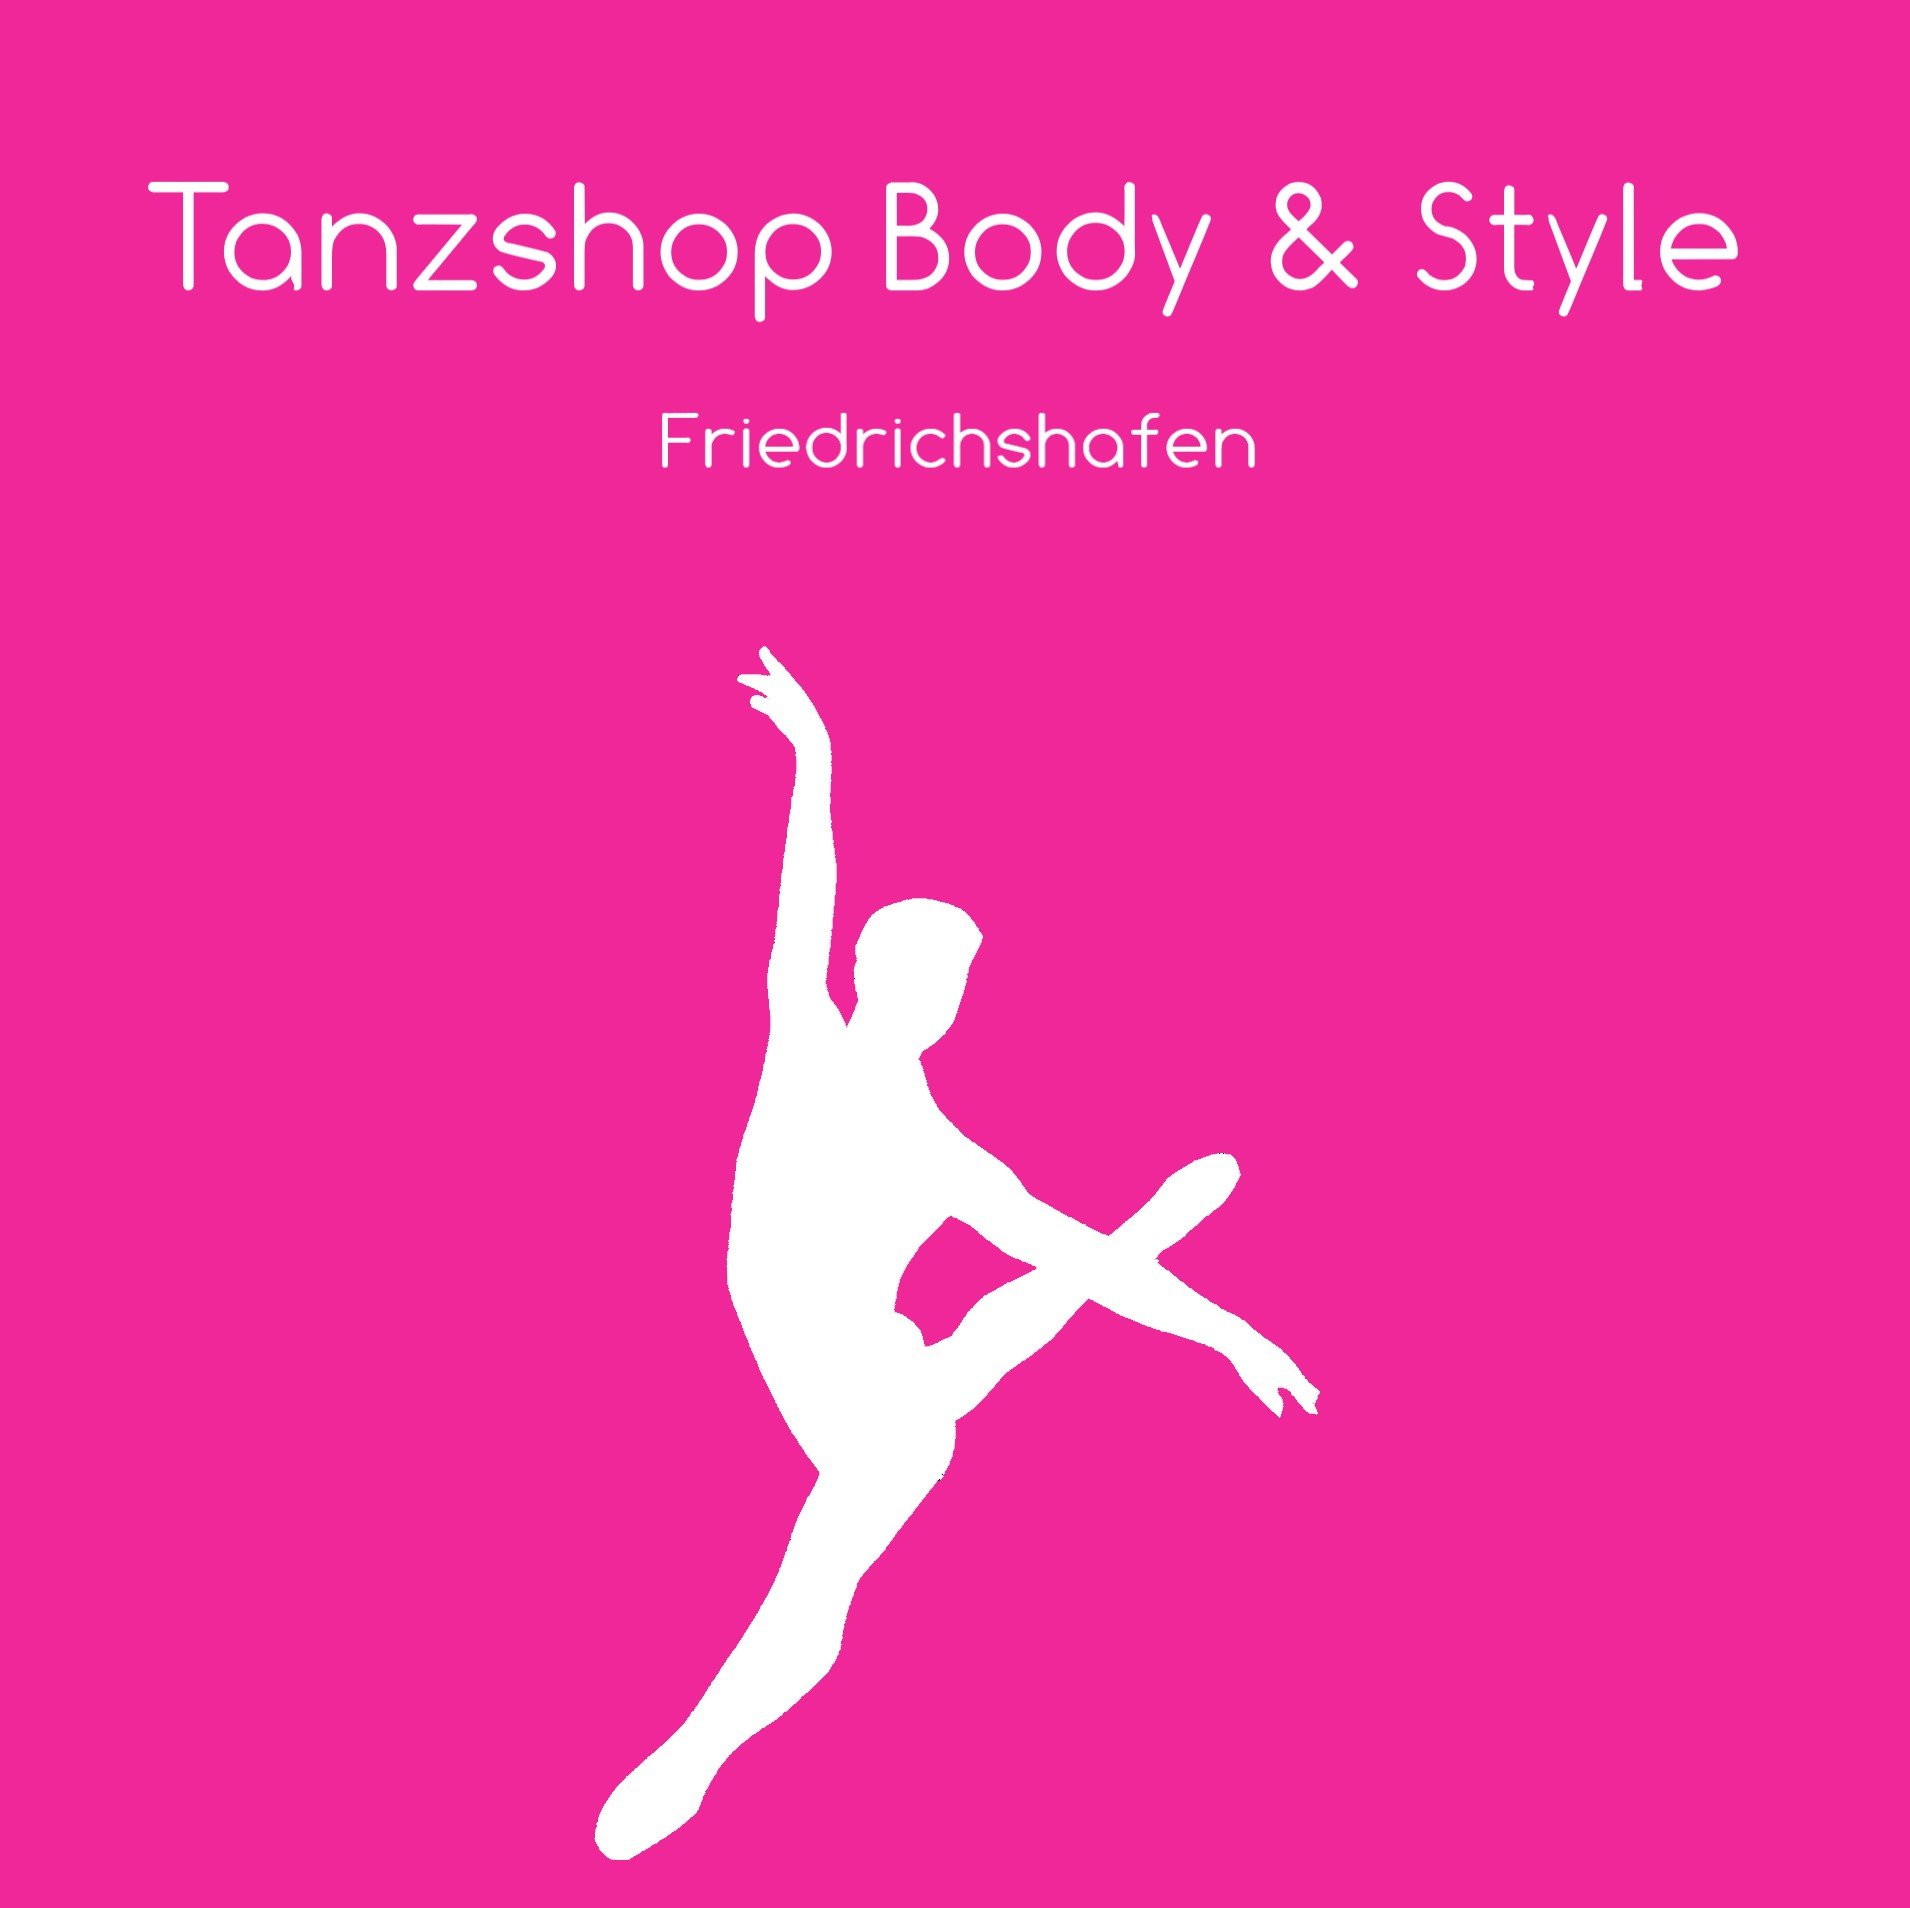 Tanzshop Body & Style